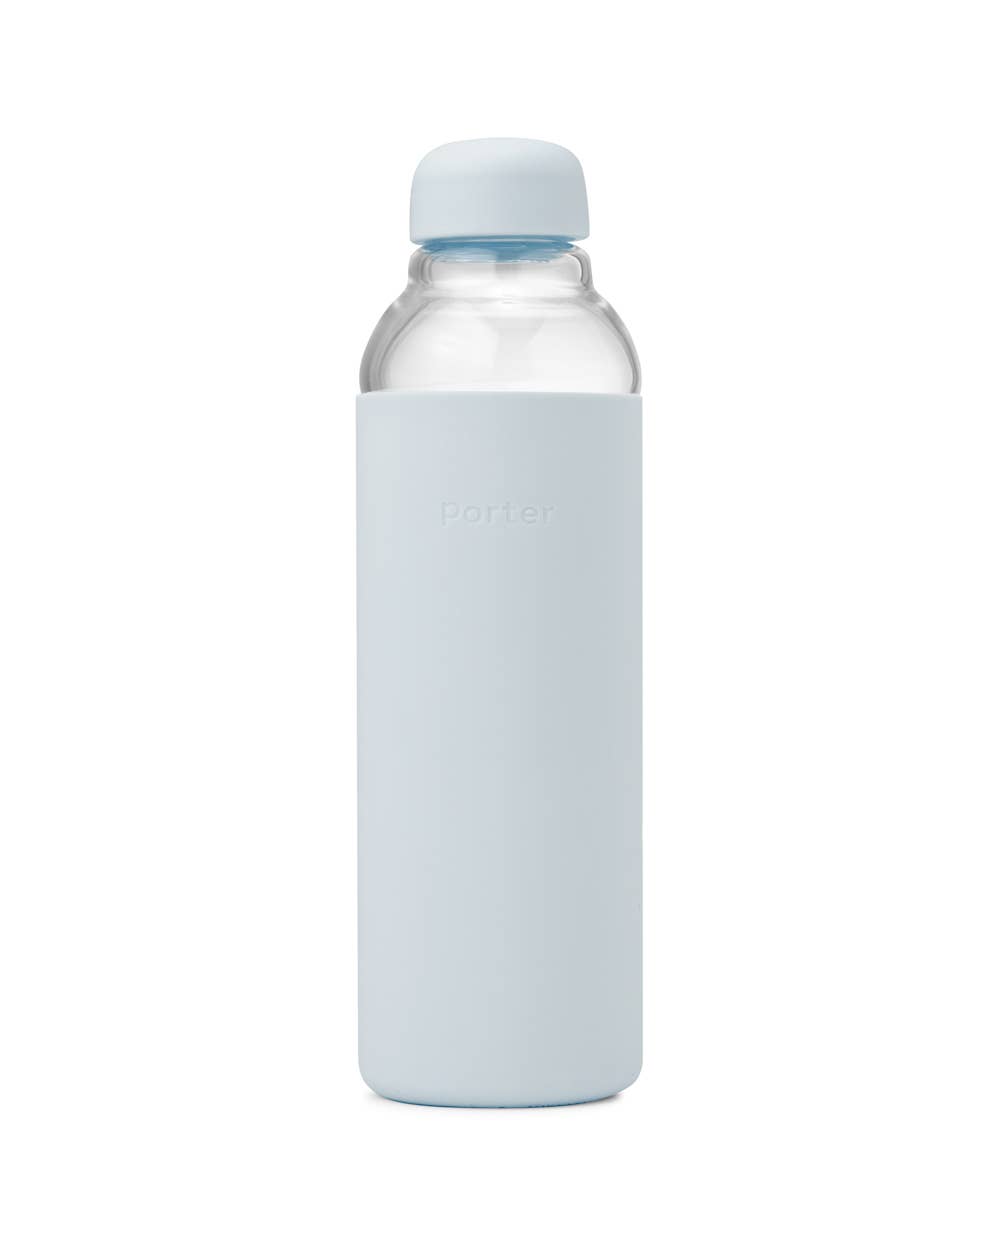 Glass Water Bottle: Lavender